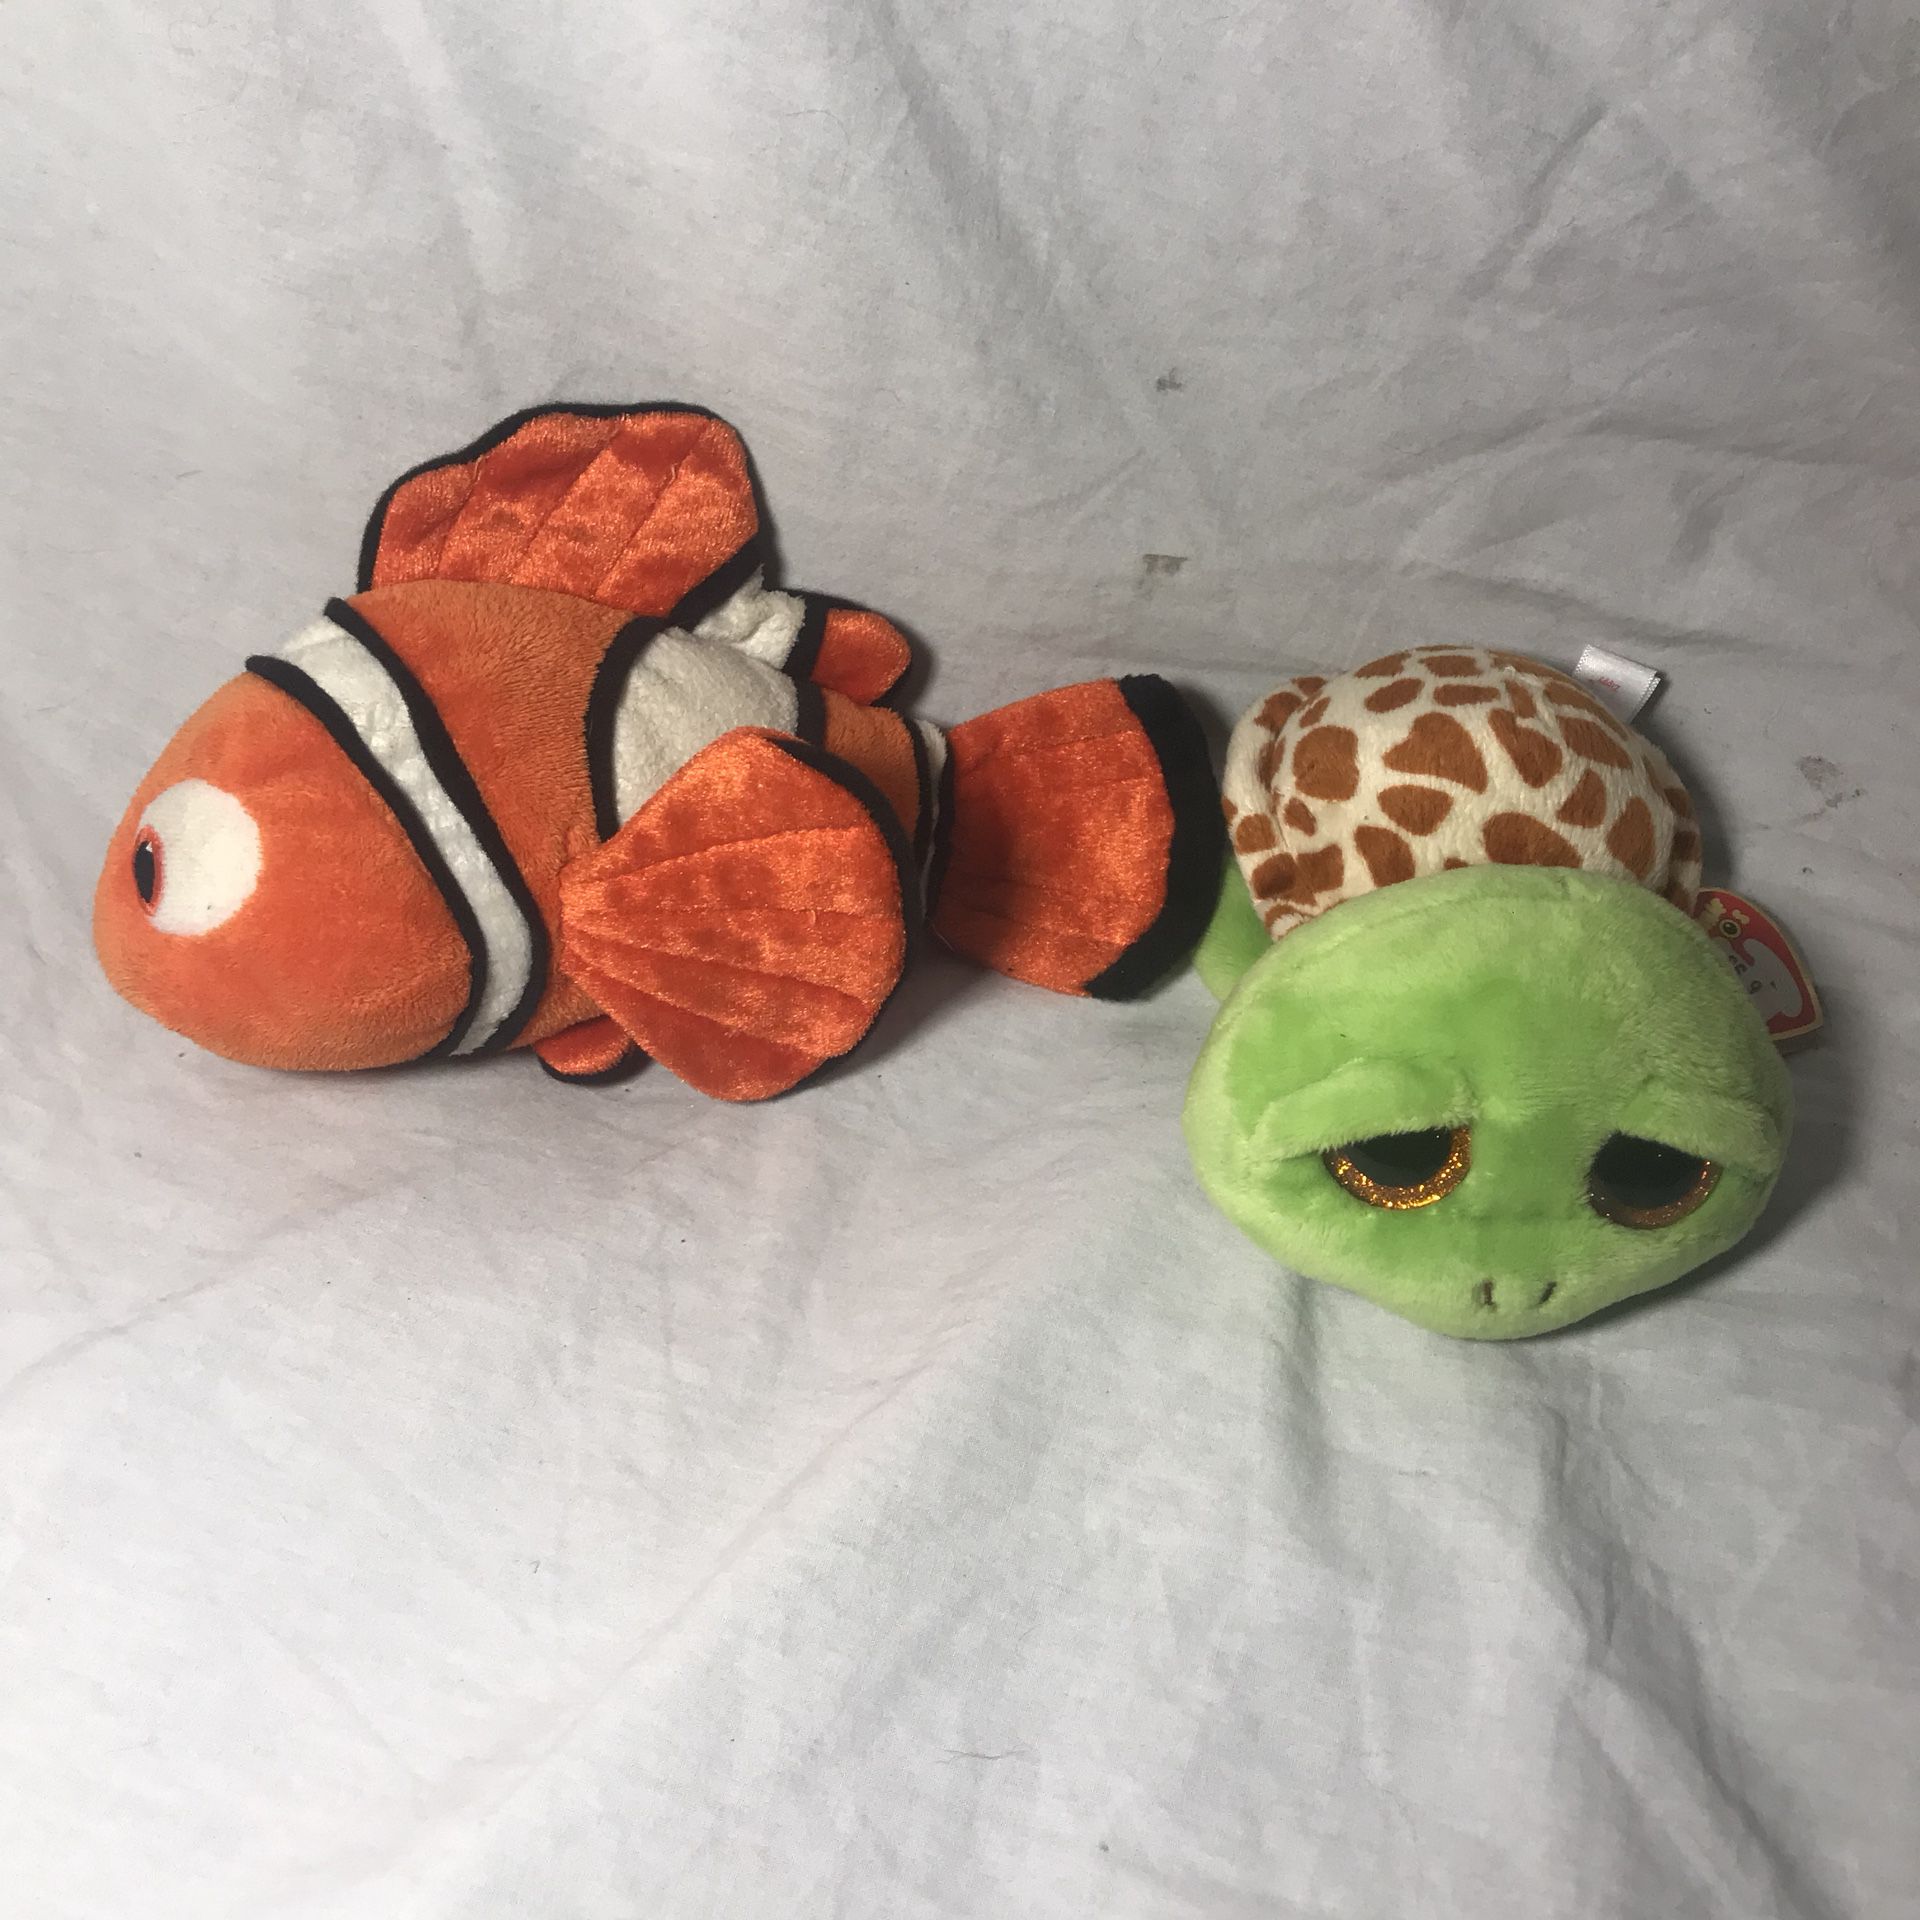 Finding Nemo & Baby Turtle Plush Toys